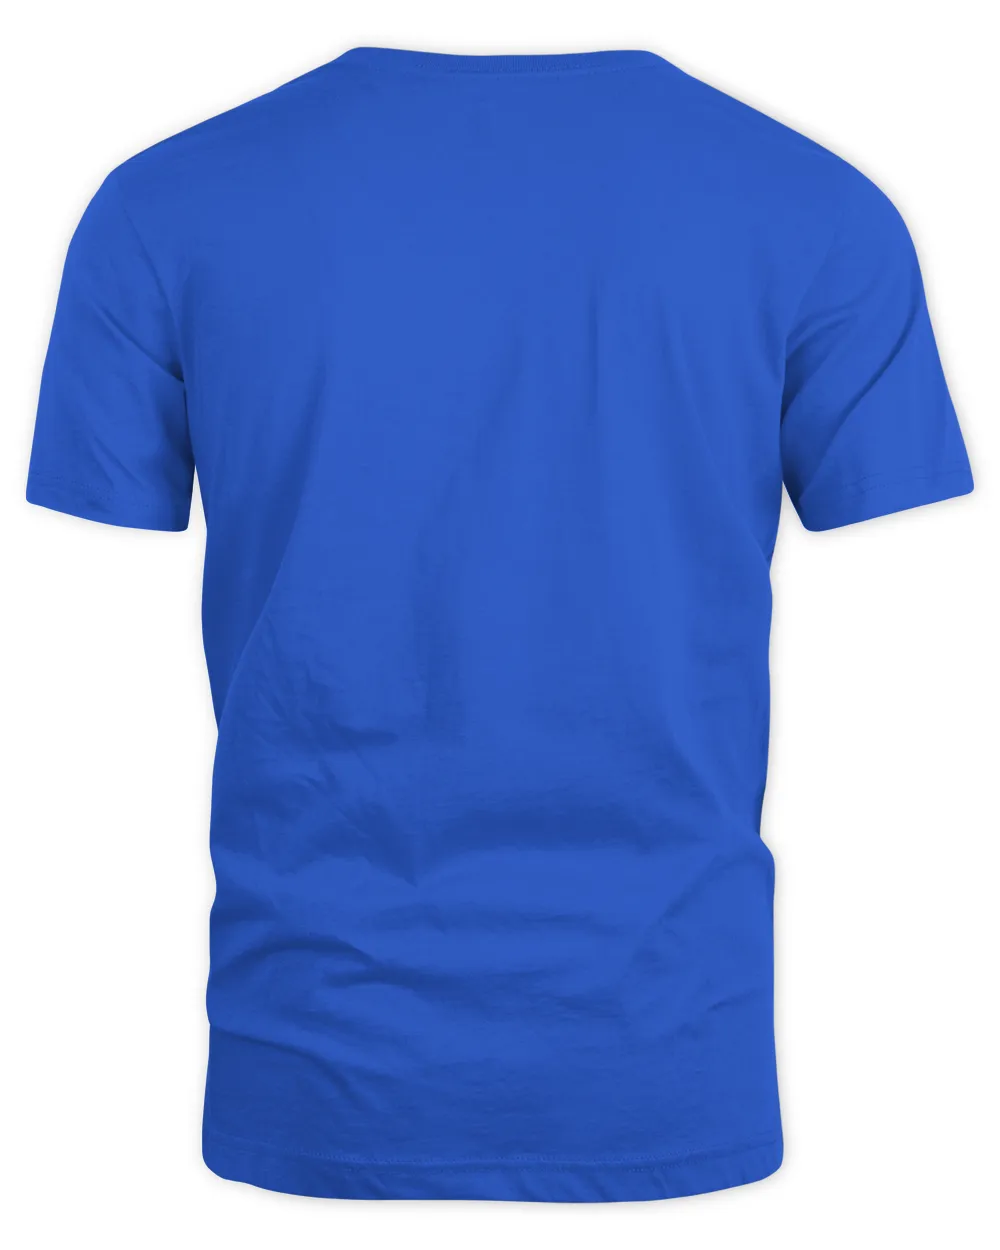 Guerrero Biggio Bichette Shirt Toronto Blue Genes